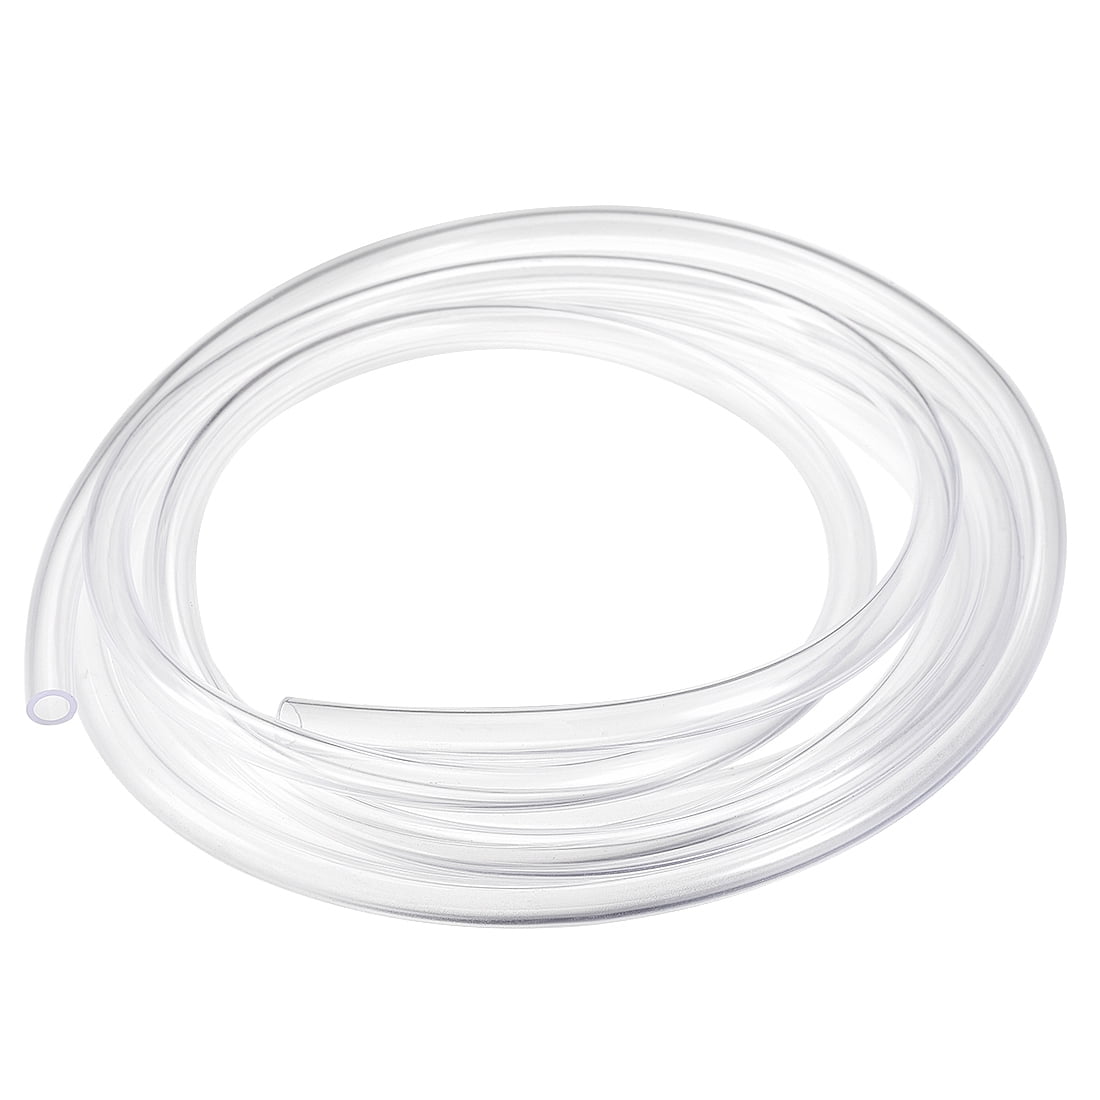 PVC Clear Vinly Tubing,3mm ID x 5mm OD,5 Meter,Plastic Flexible Hose Tube 